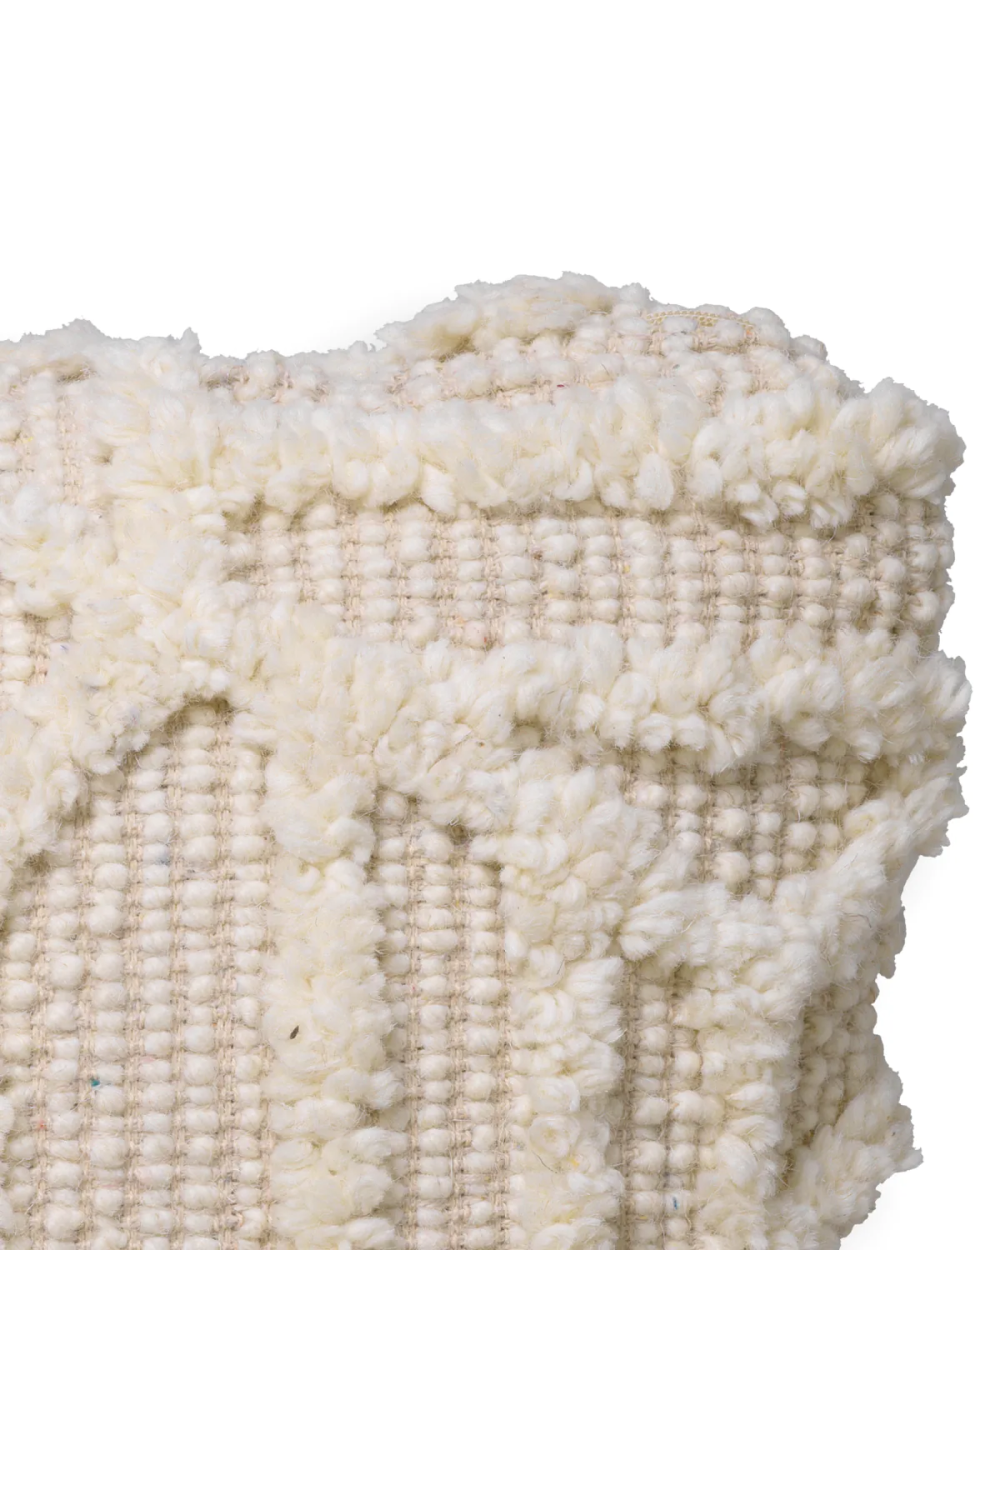 Embossed White Wool Cushion | Eichholtz San Juan | Oroa.com